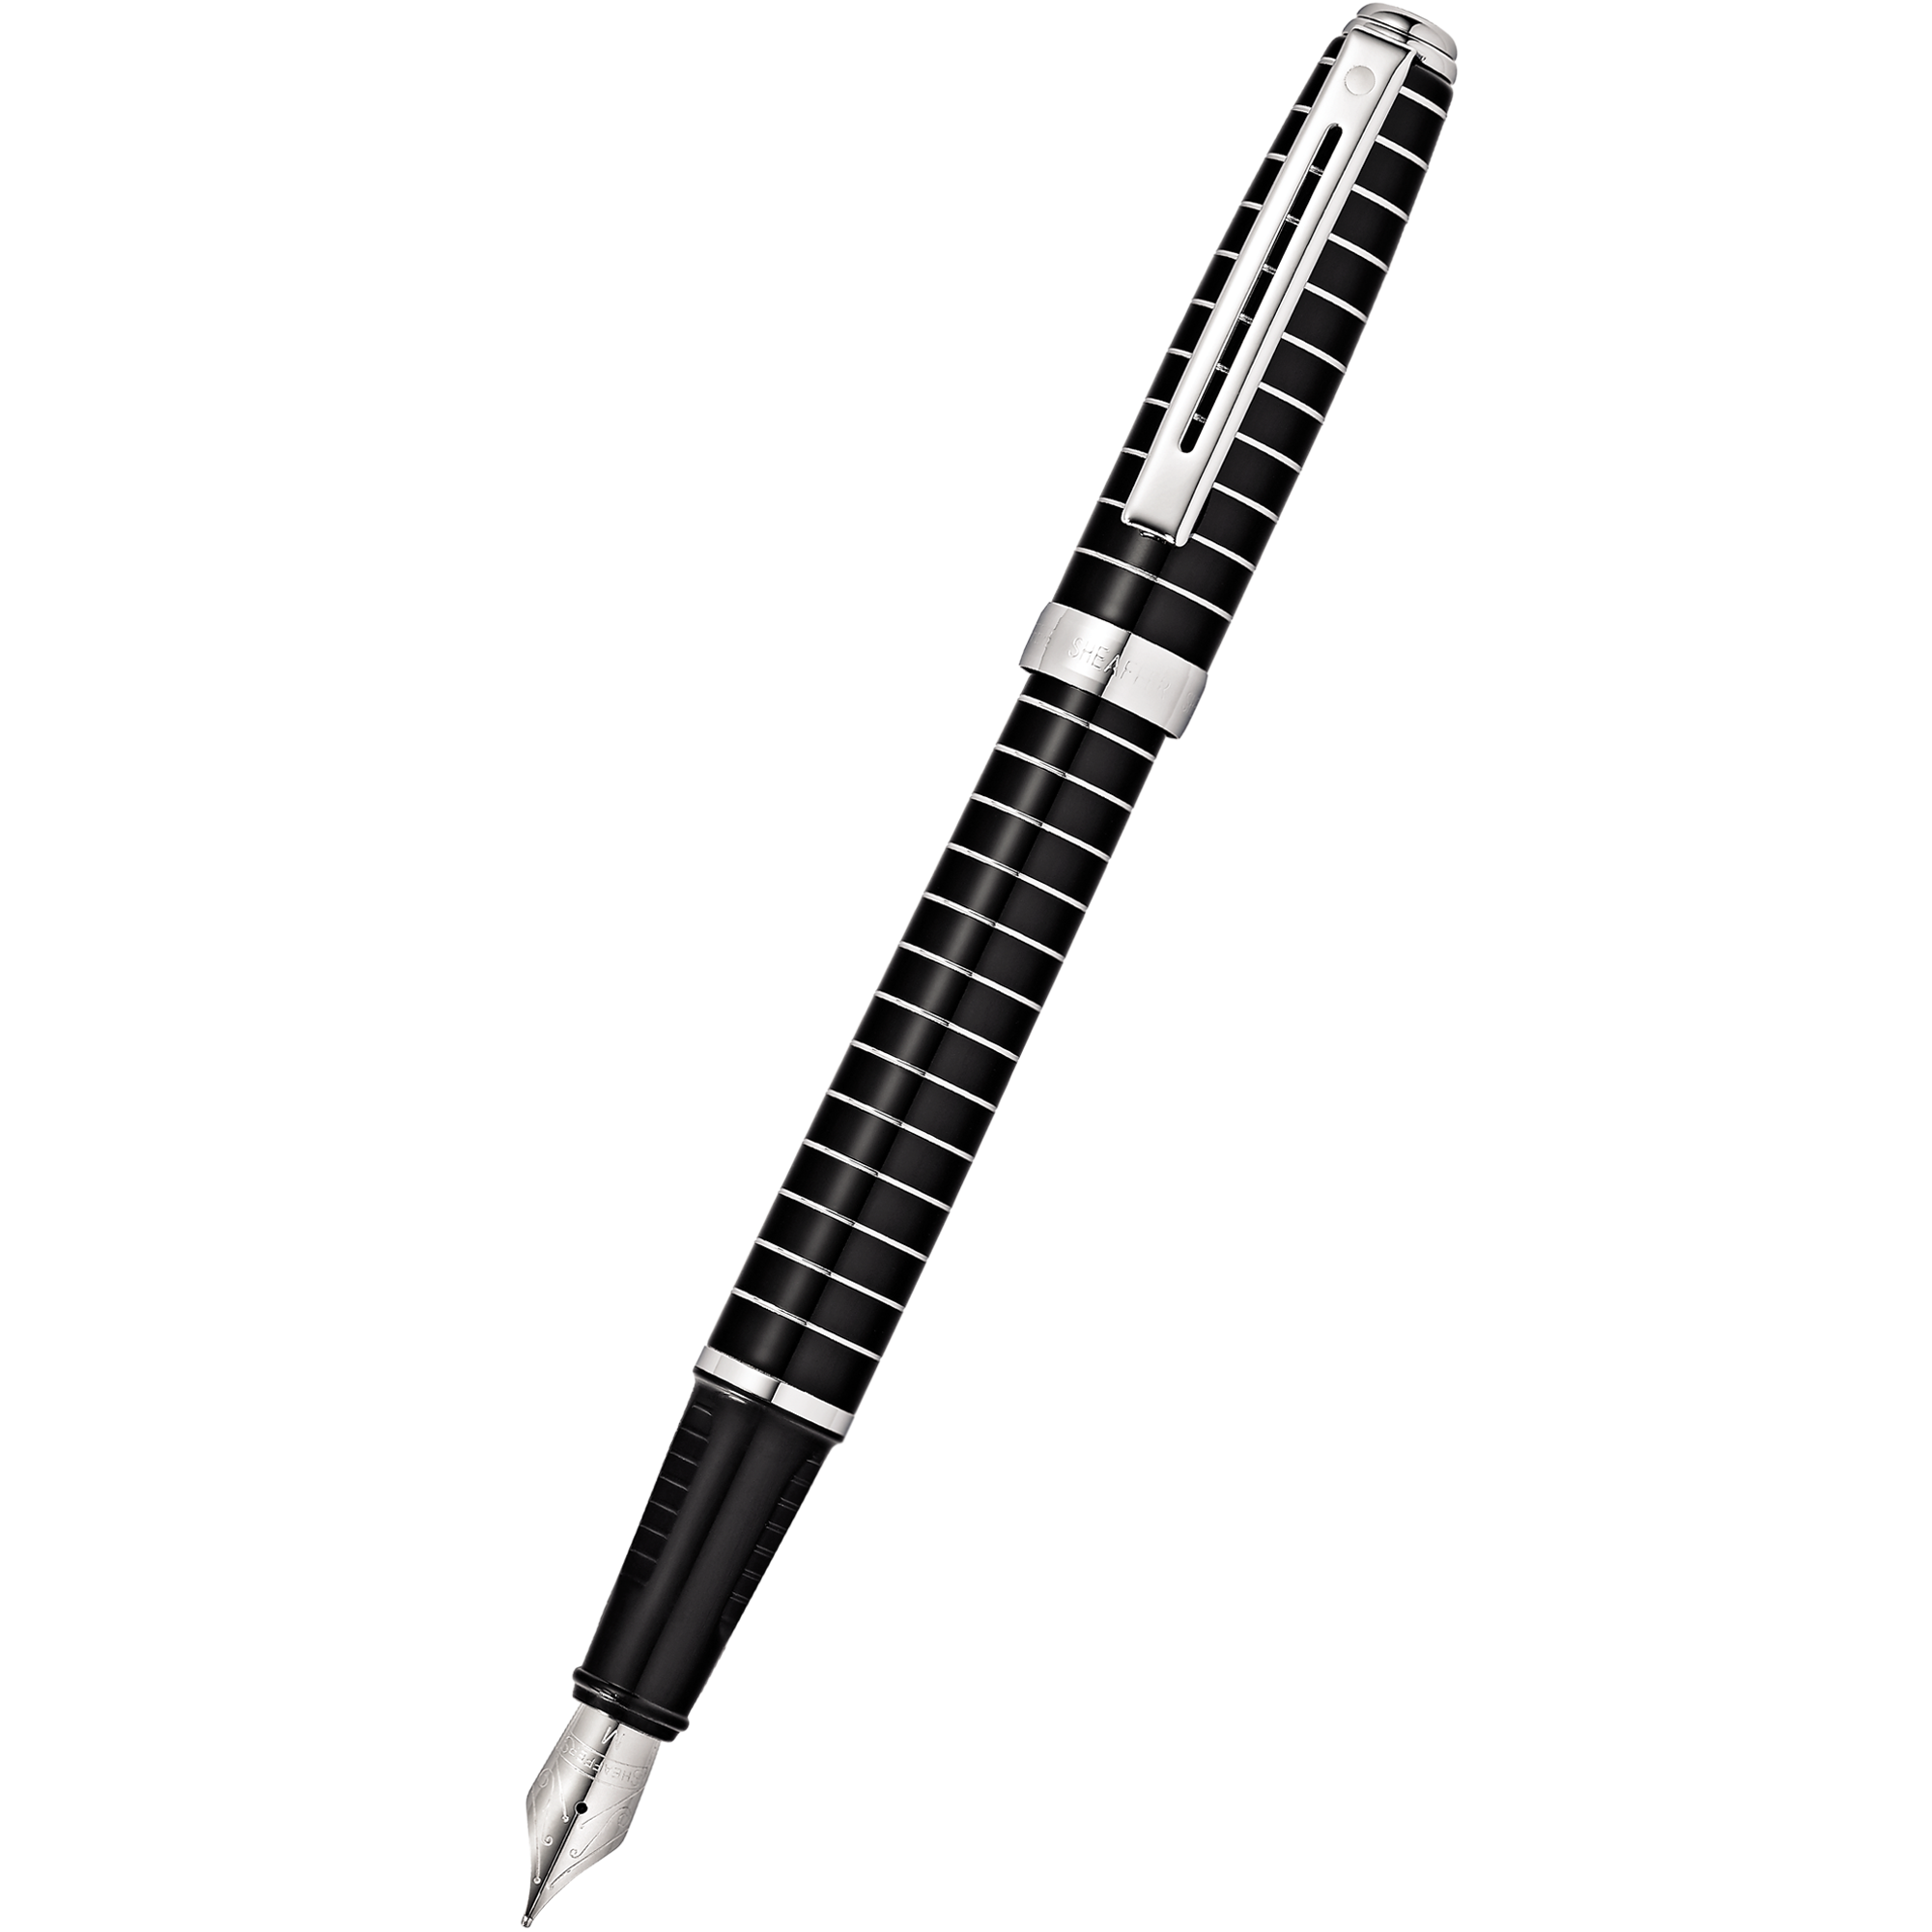 Sheaffer Prelude Fountain Pen - Black - Chrome Trim-Pen Boutique Ltd